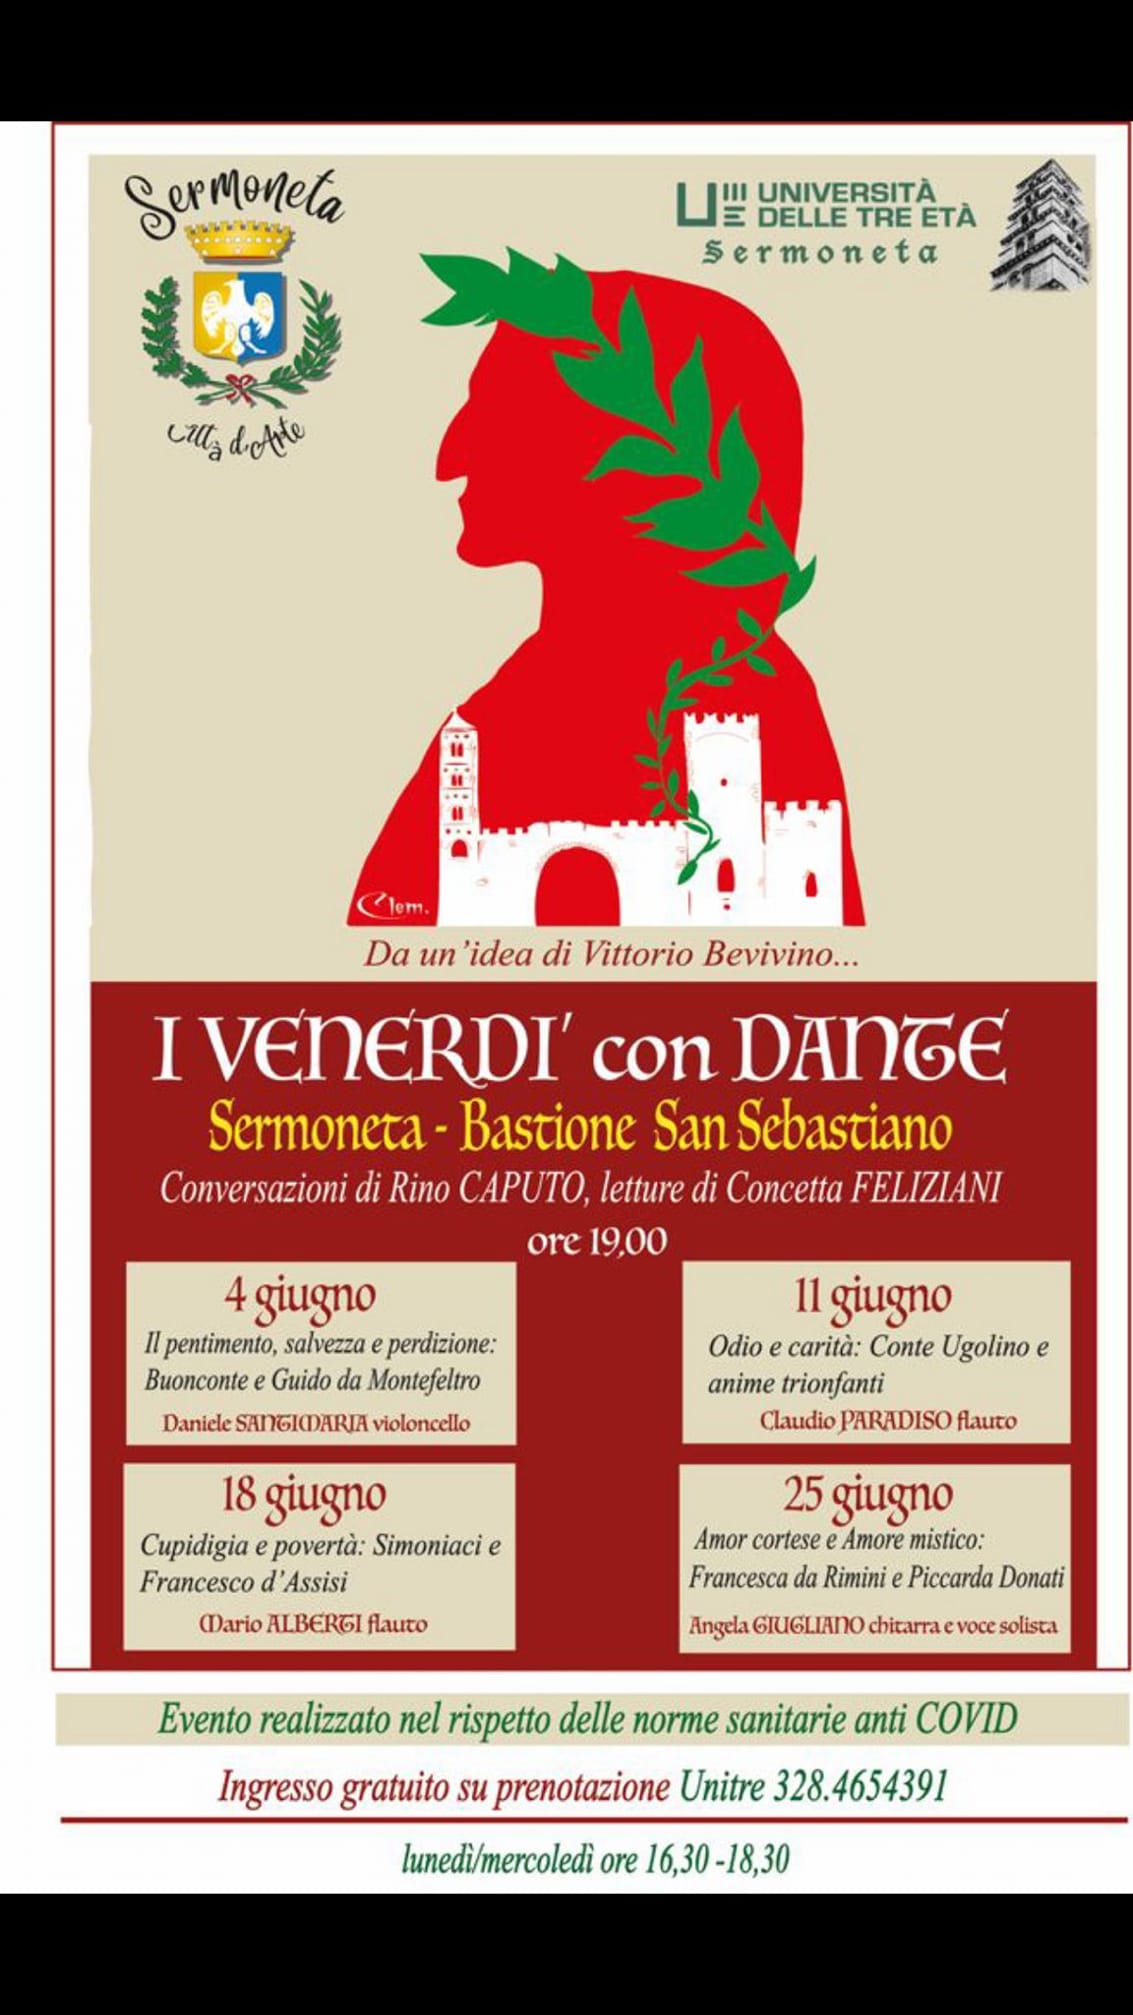 Sermoneta celebra il Sommo Poeta con “I Venerdì con Dante”